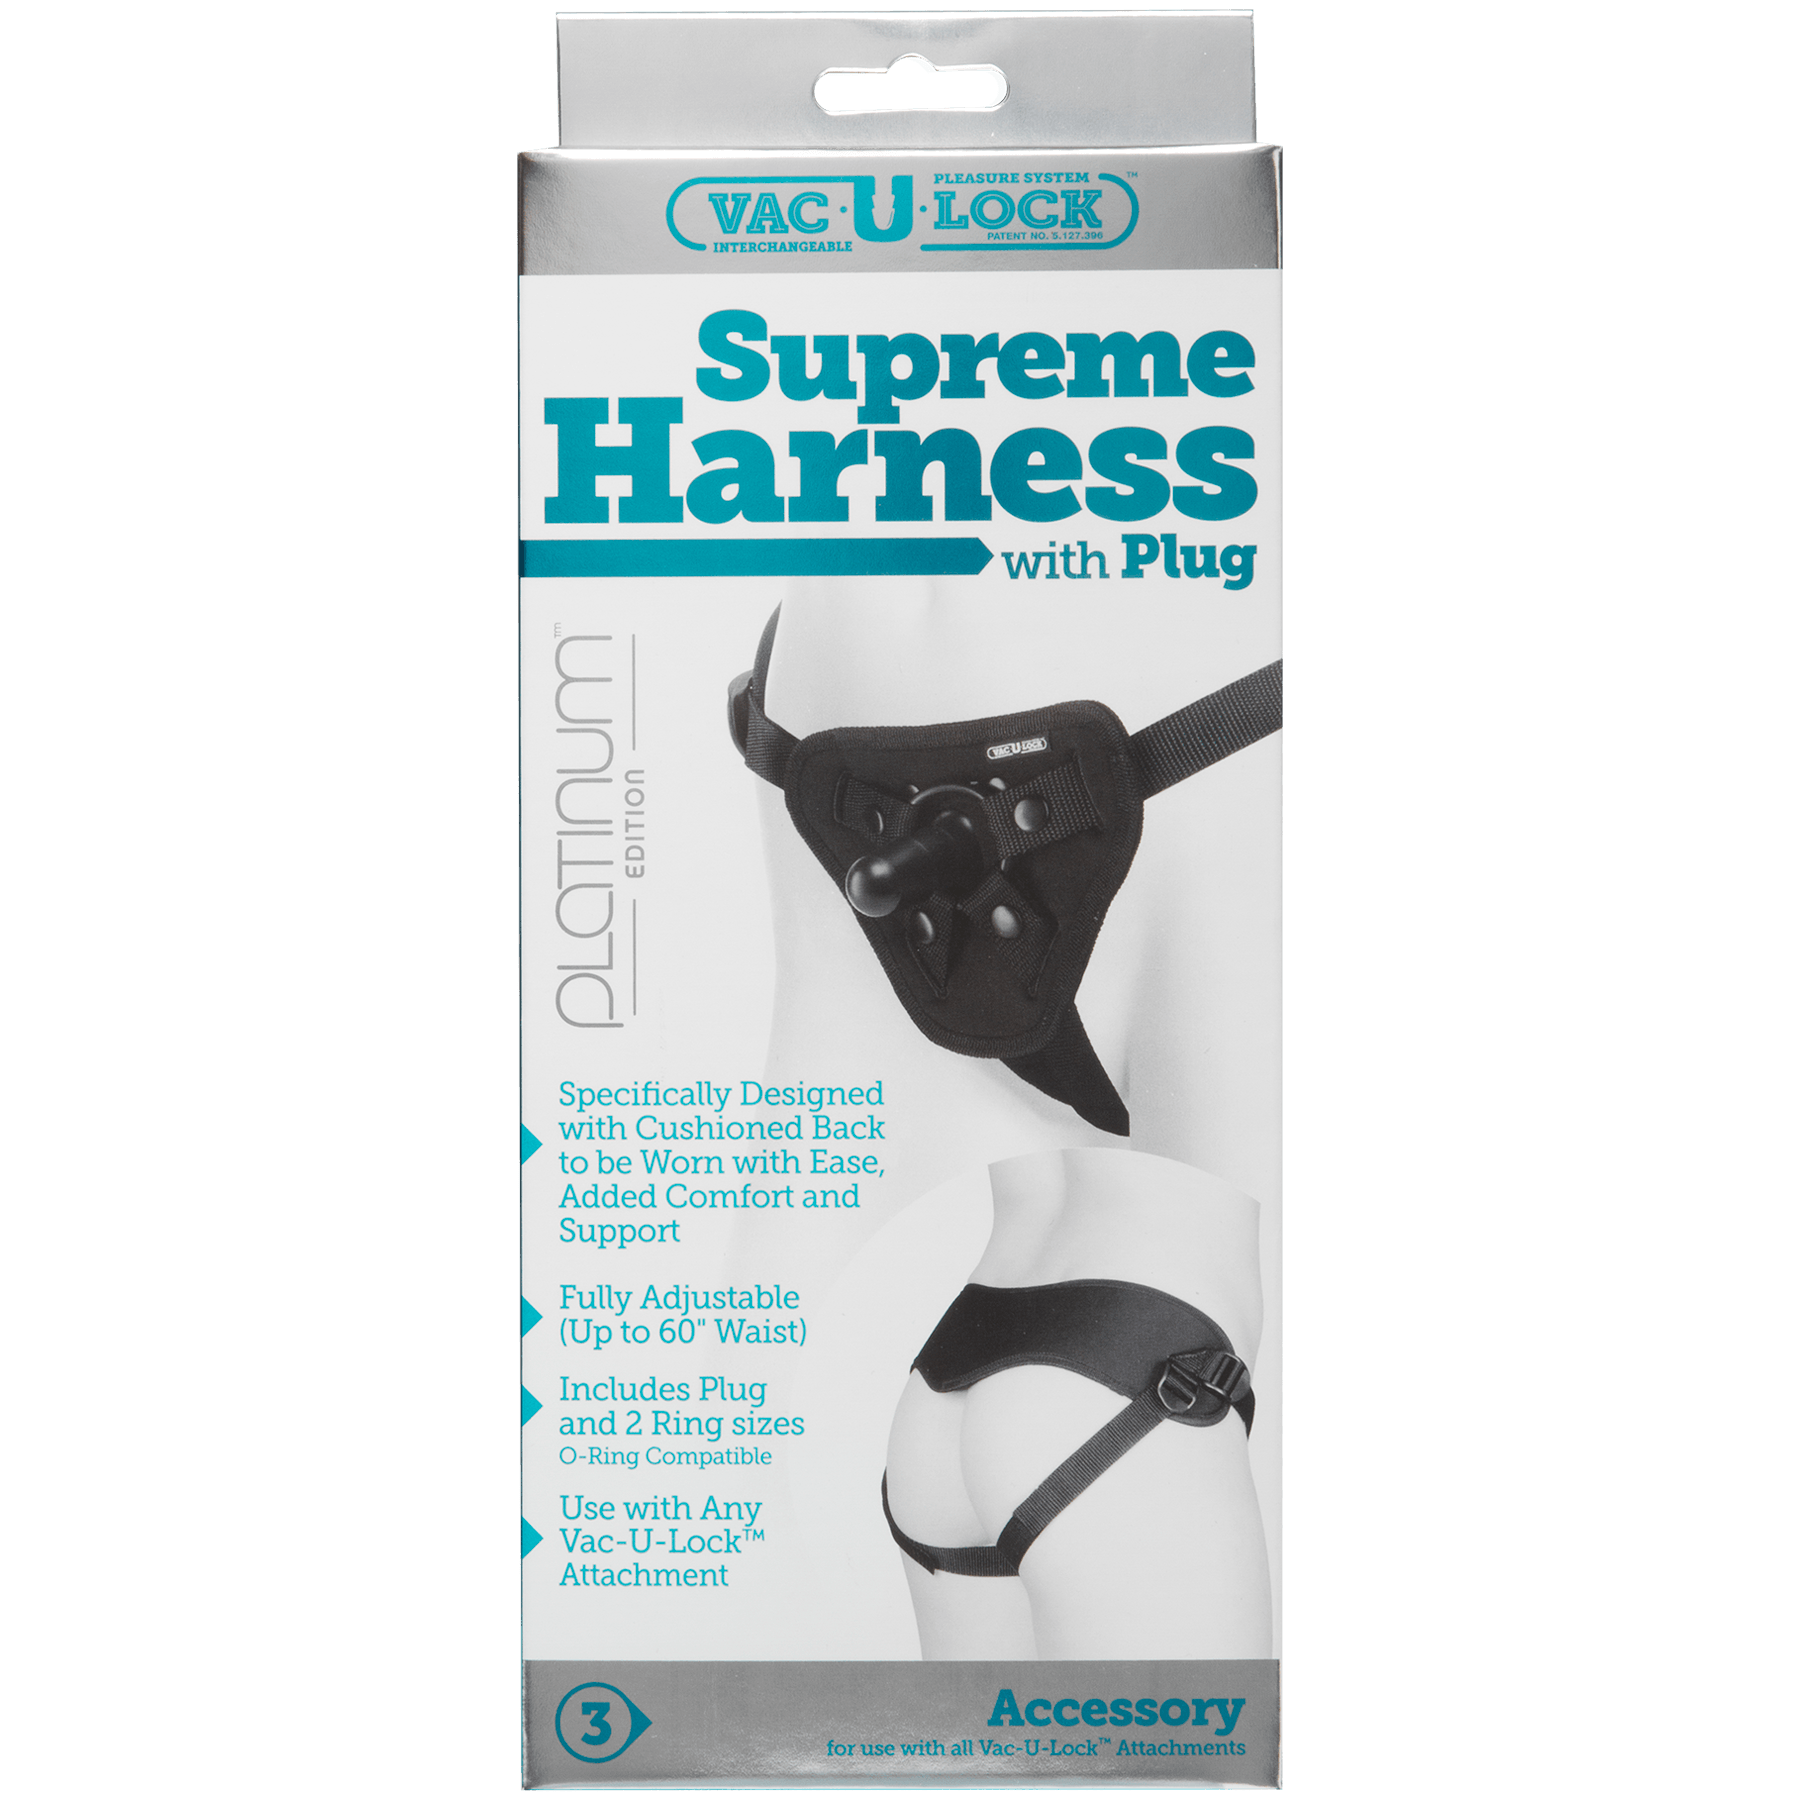 Vac-U-Lock Platinum Supreme Harness - Buy At Luxury Toy X - Free 3-Day Shipping